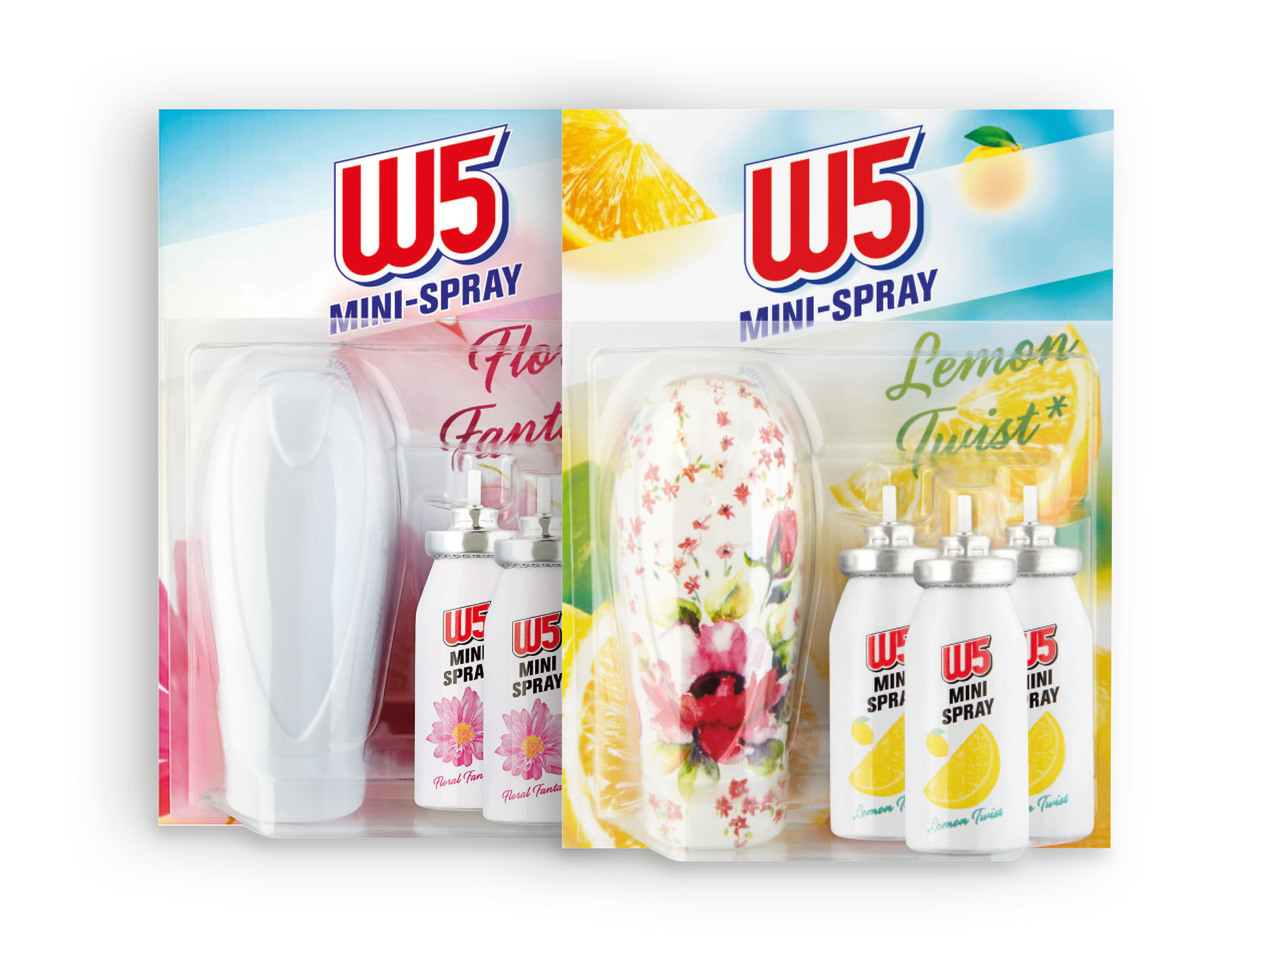 W5(R) Minispray